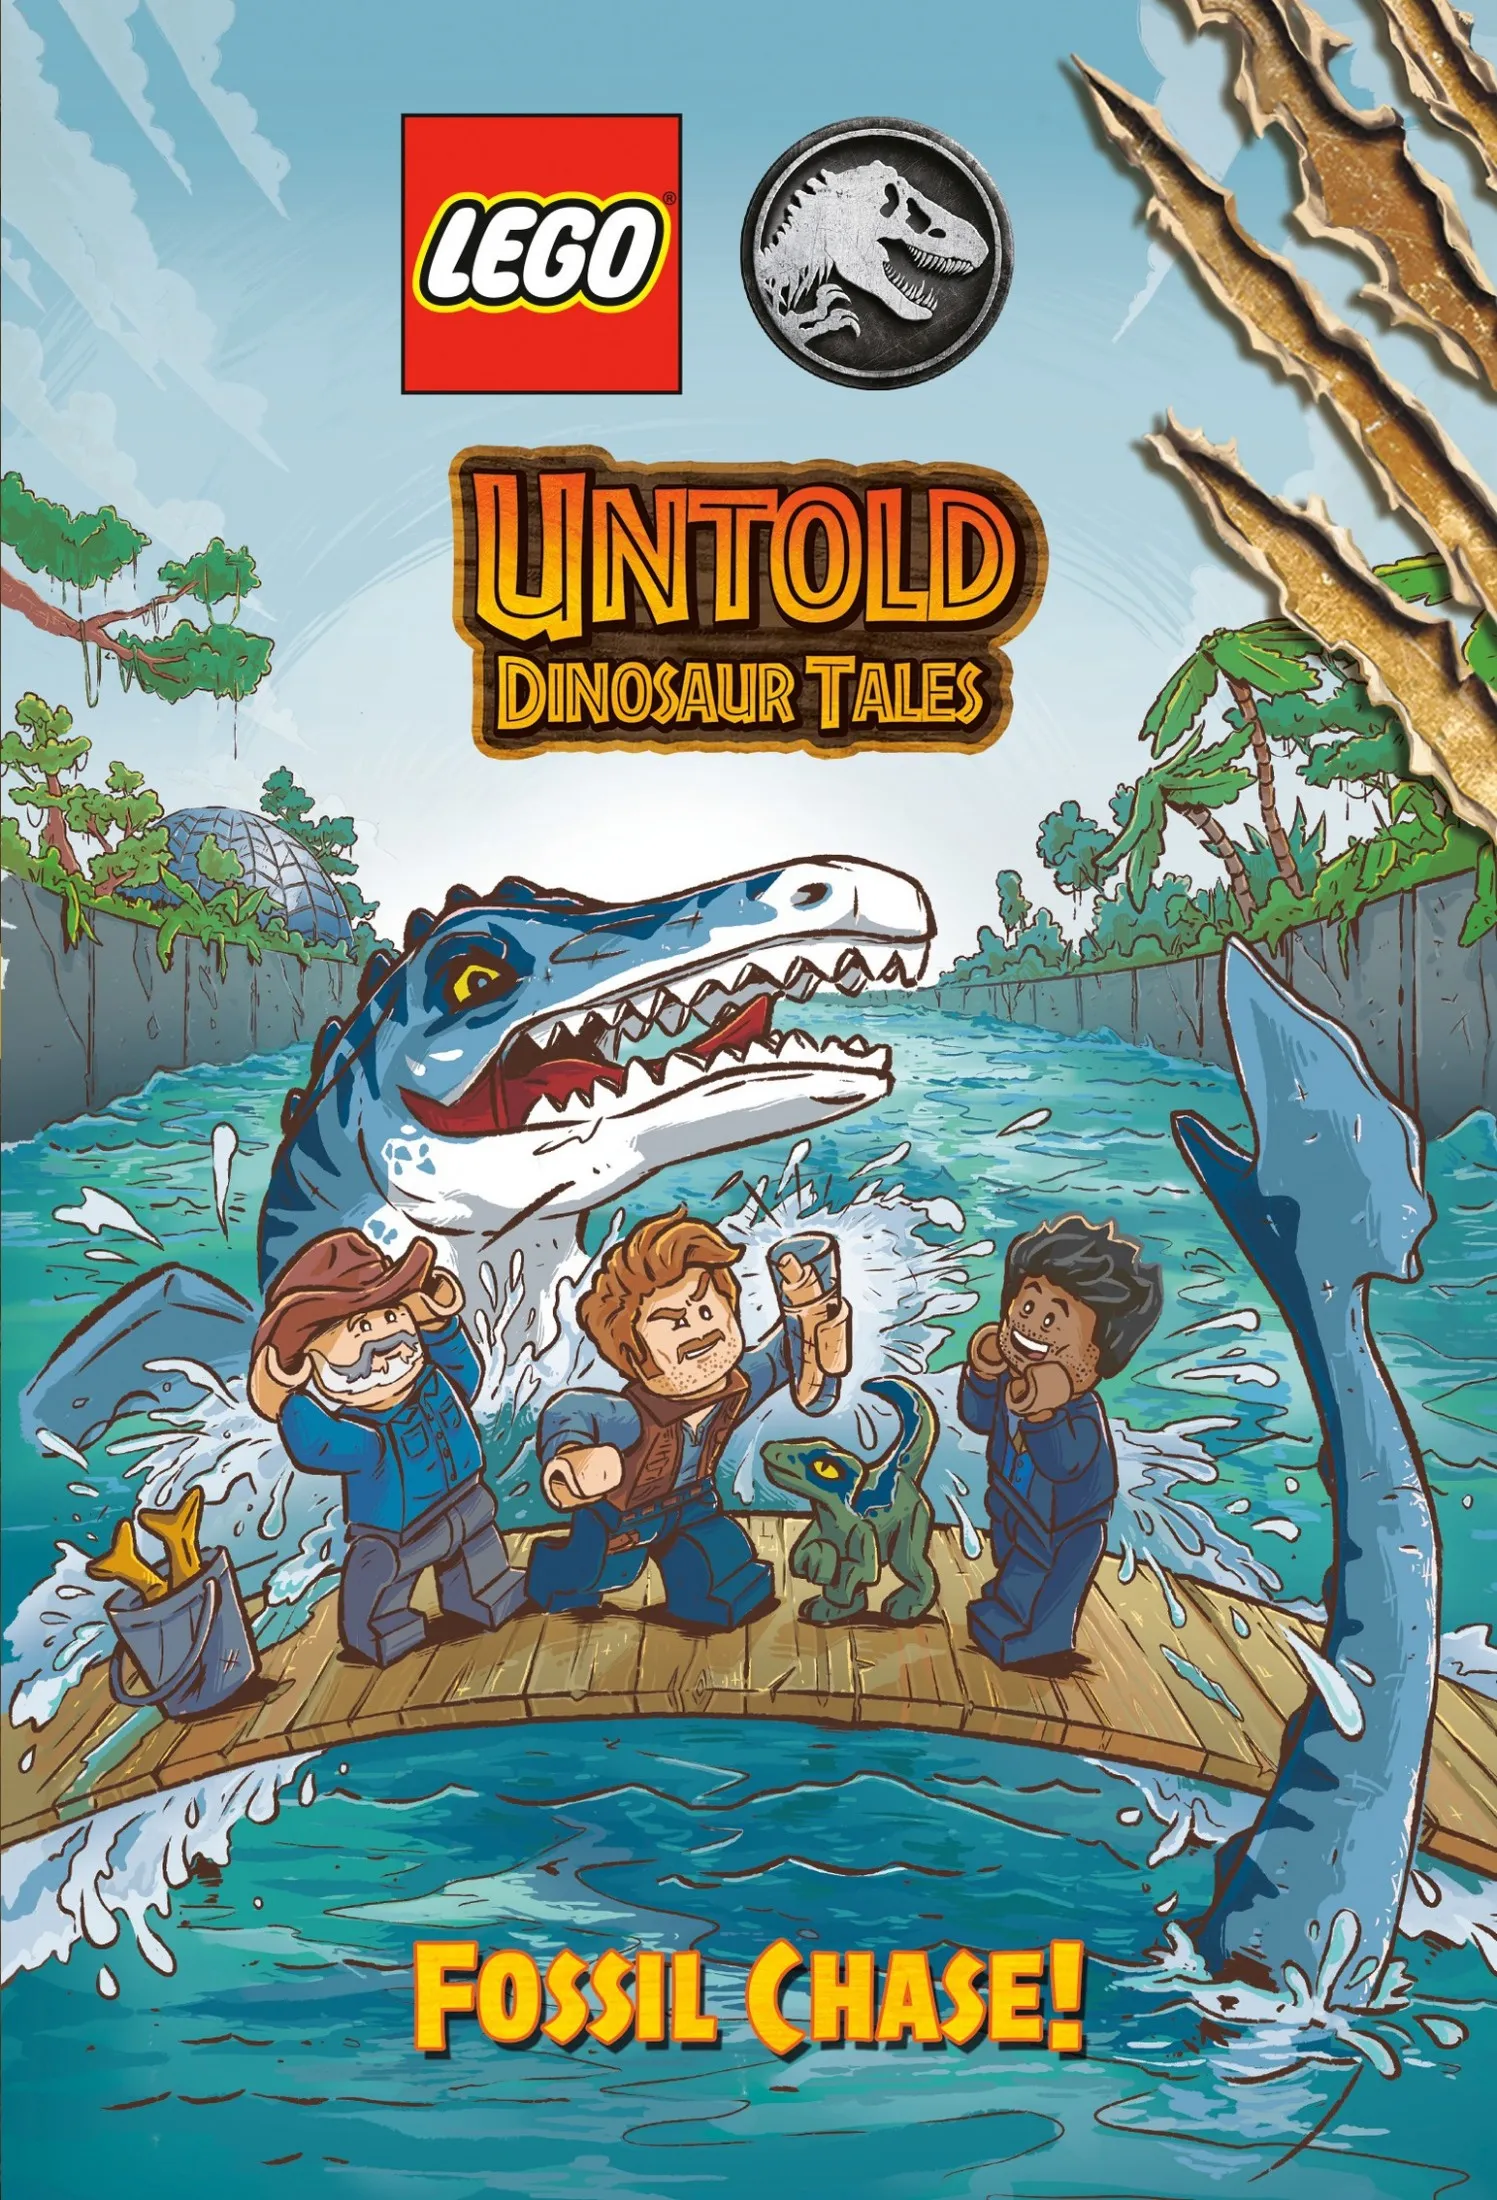 Fossil Chase! (Untold Dinosaur Tales #3) (LEGO Jurassic World)